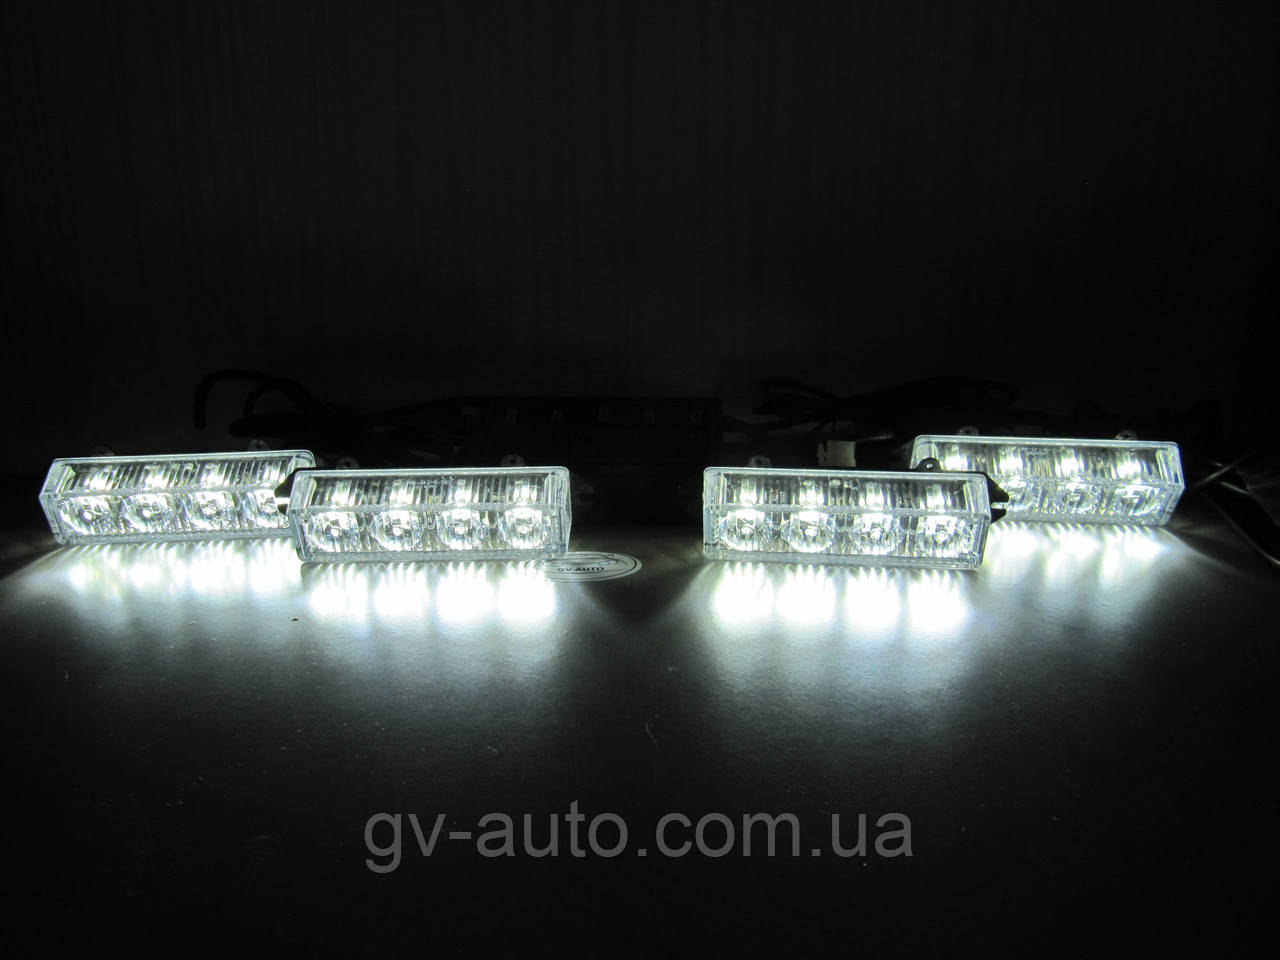 Стробоскопи LED 4-2-16 білі 12-24V.